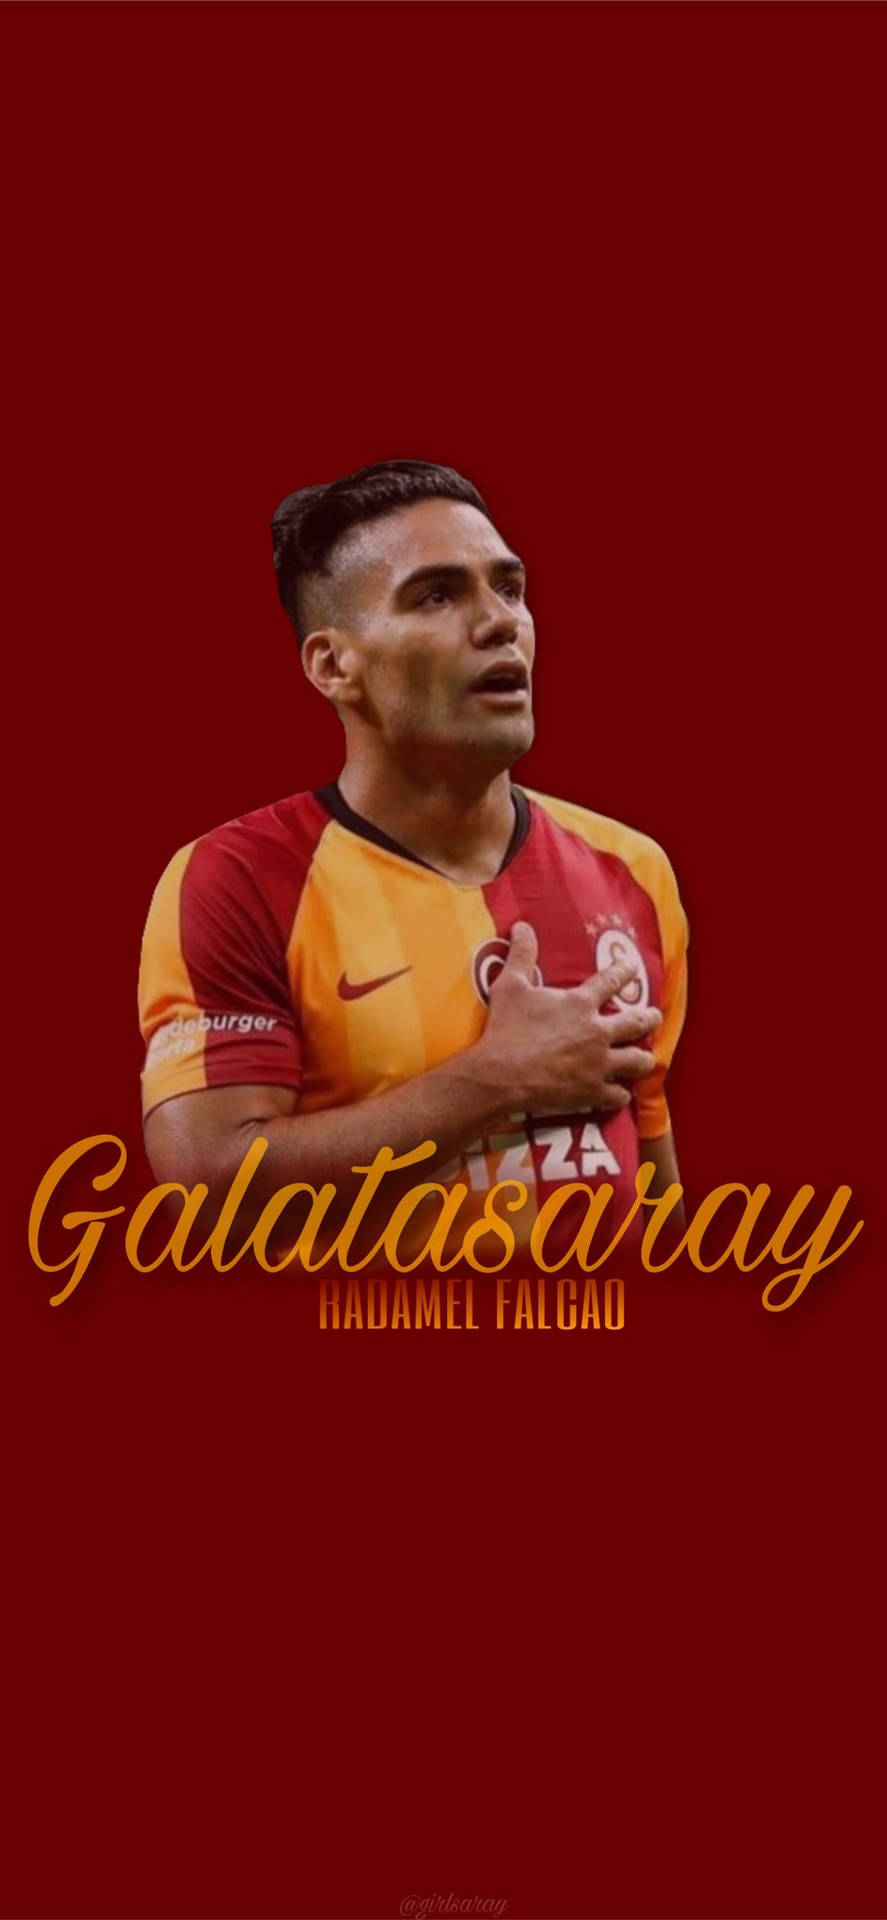 Galatasaray Radamel Falcao Wallpaper